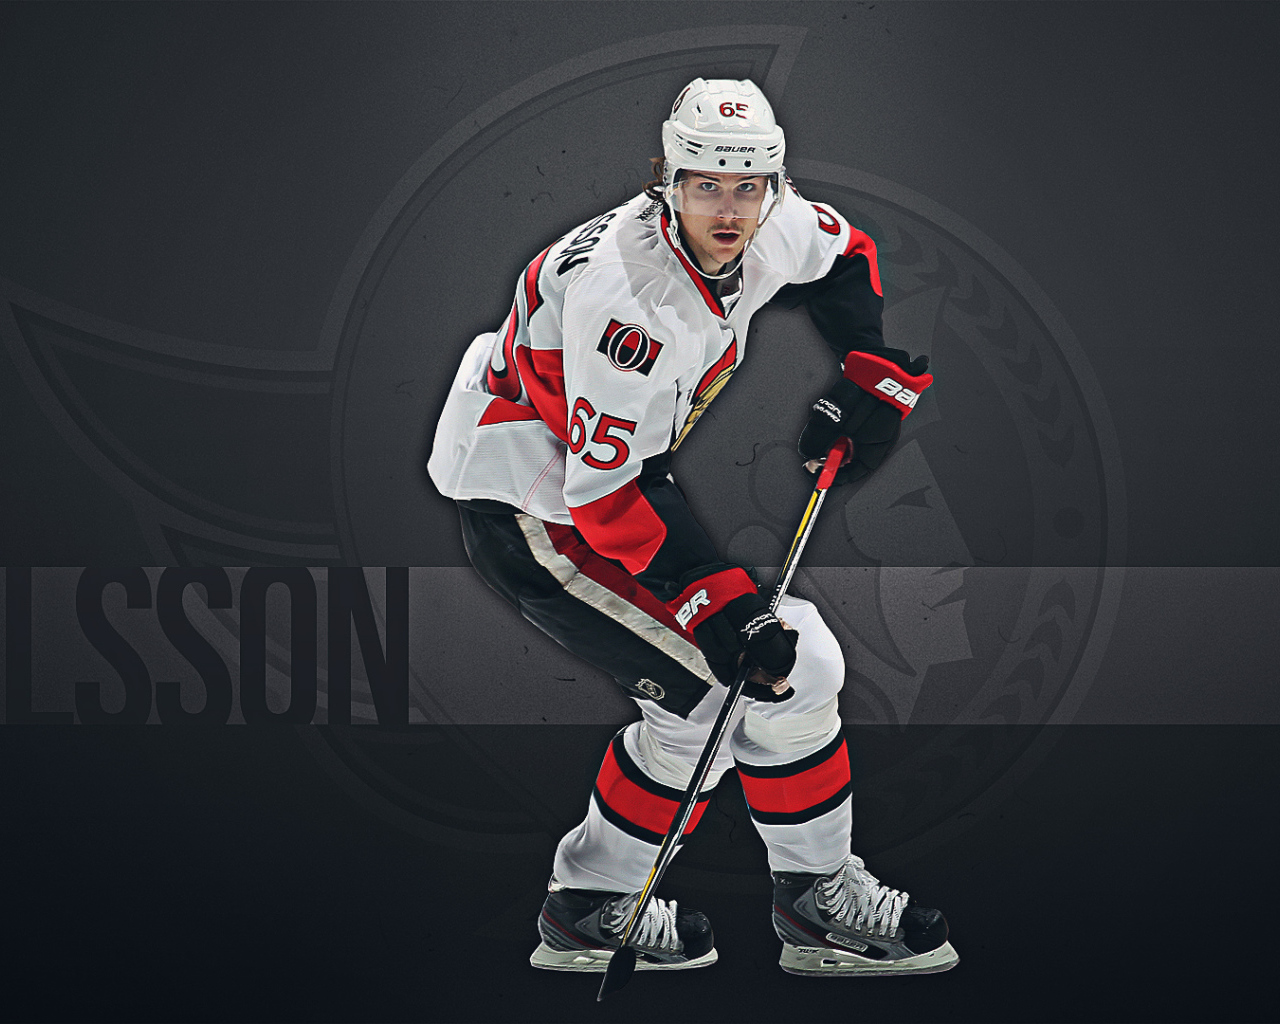 Best Hockey player Ottawa Erik Karlsson